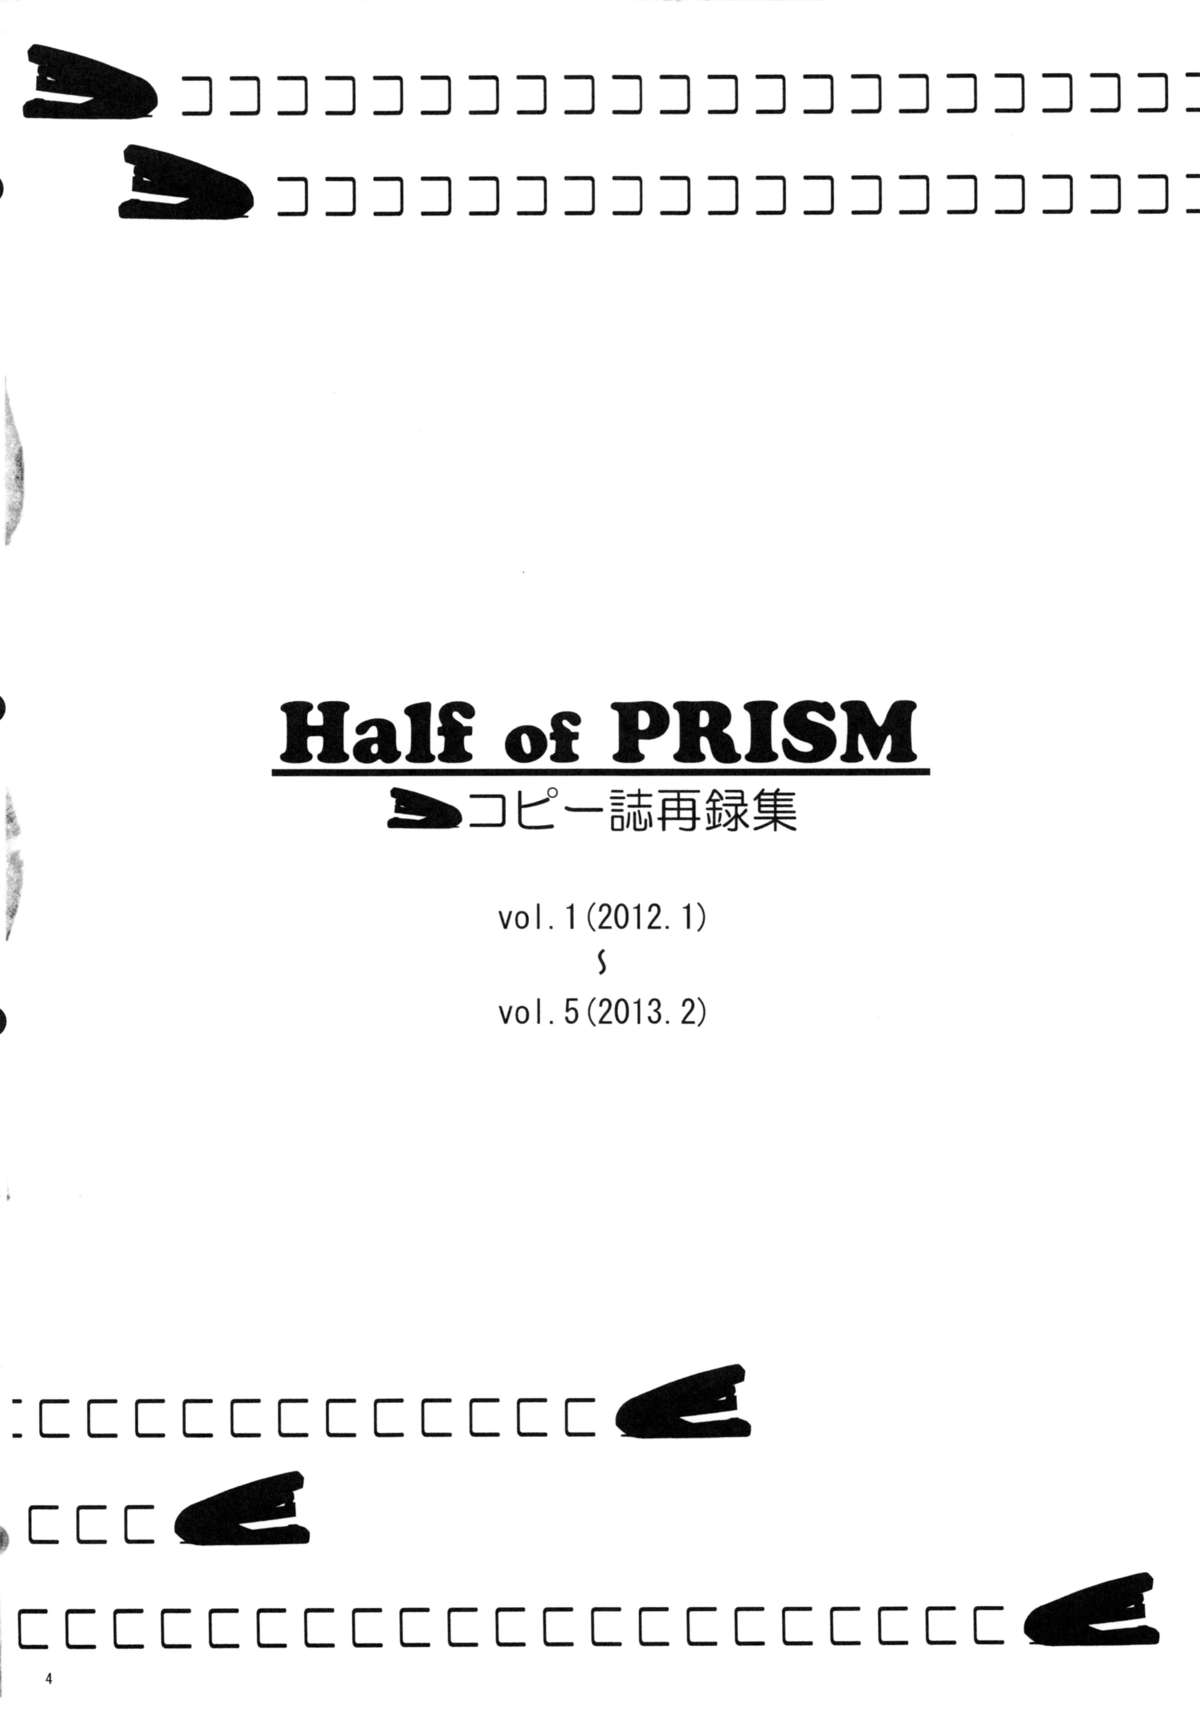 PRISMの半分